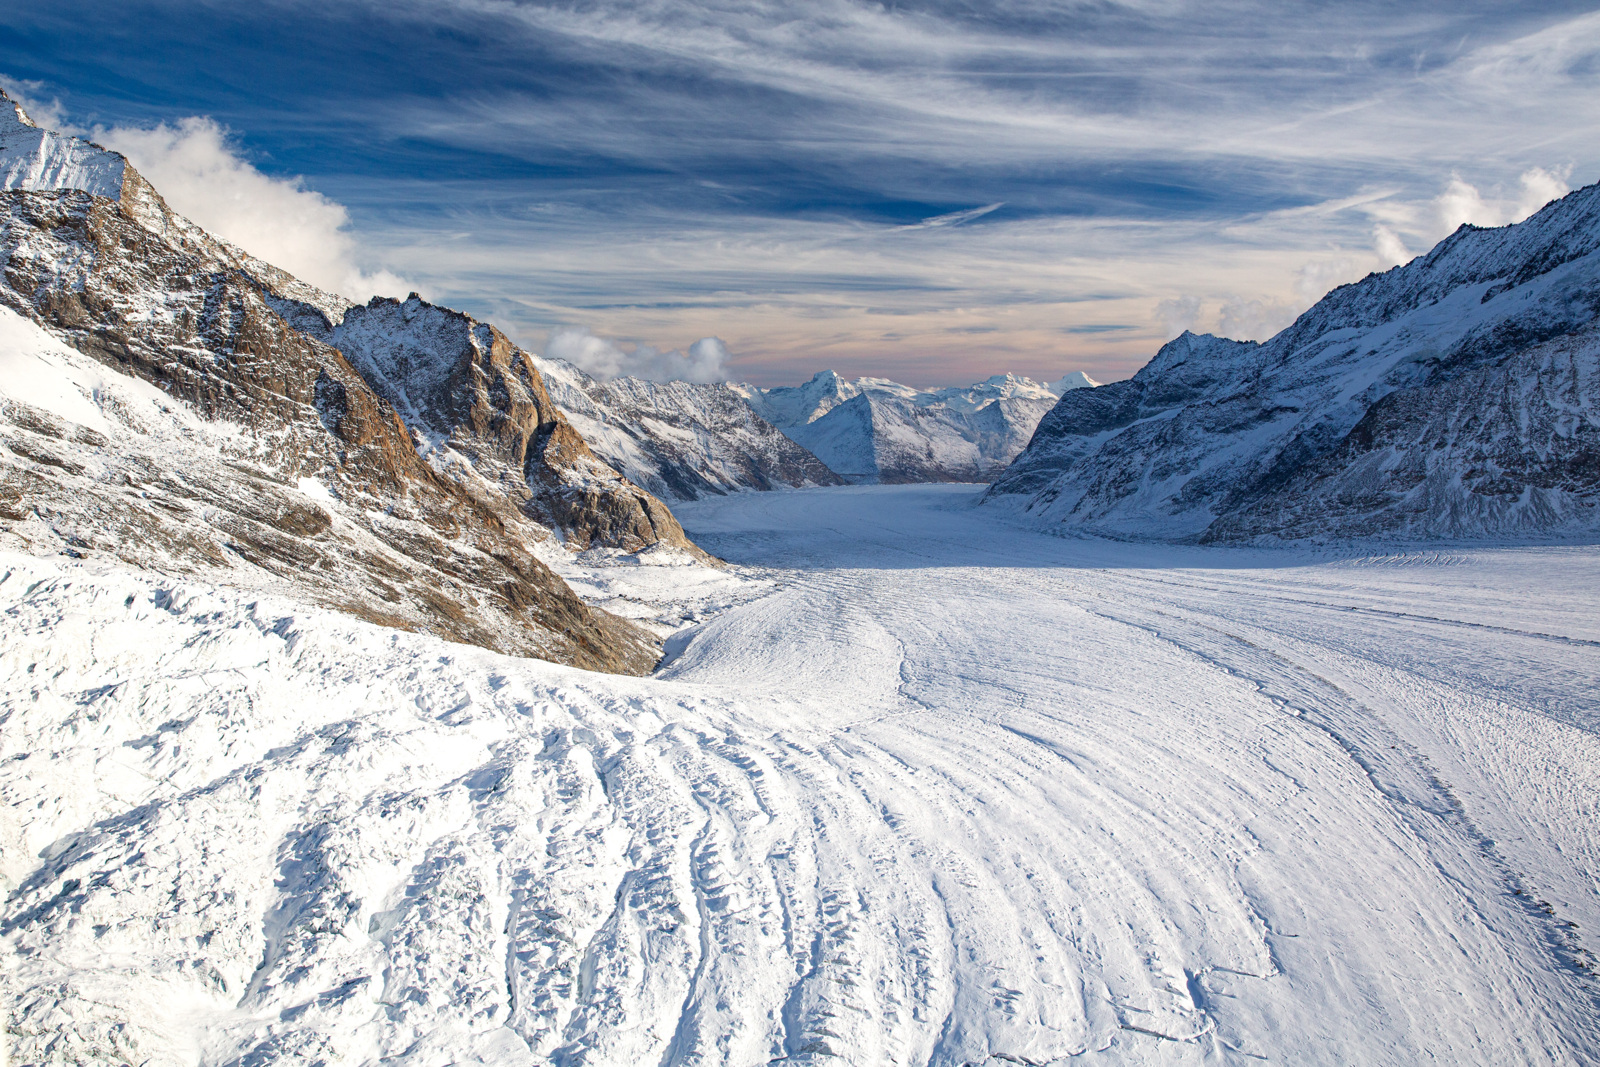 Ice flows of the Aletsch Glacier